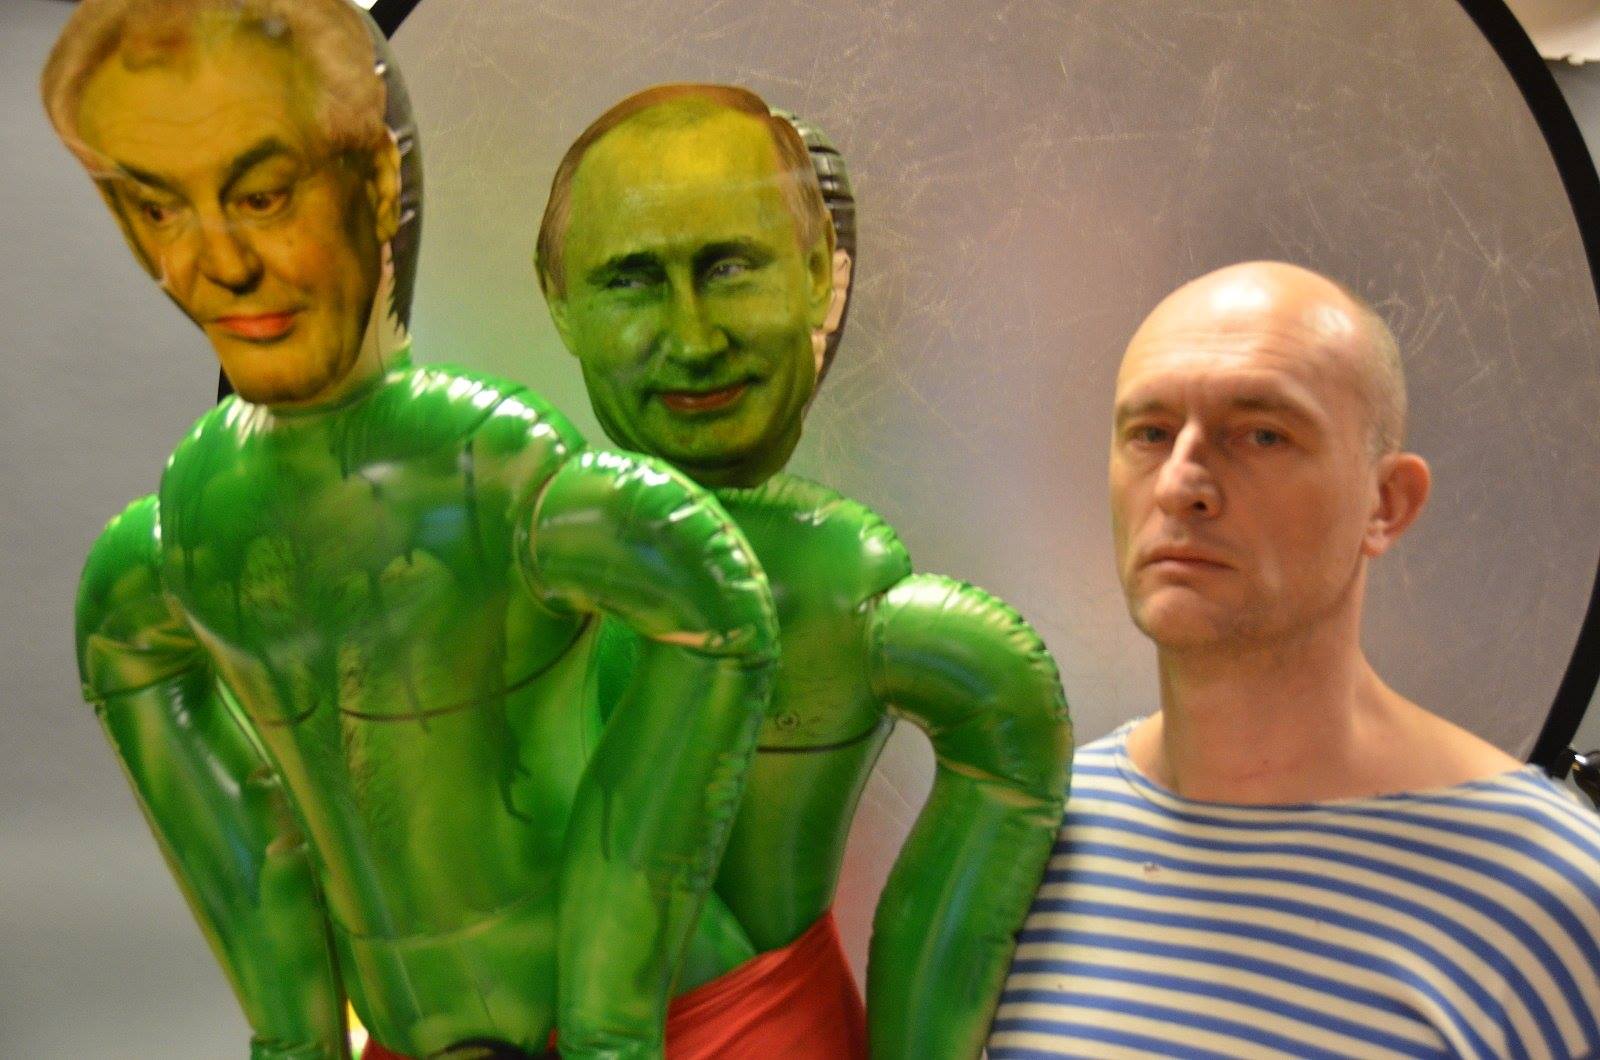 “Little green men” returned back to Russia in Prague